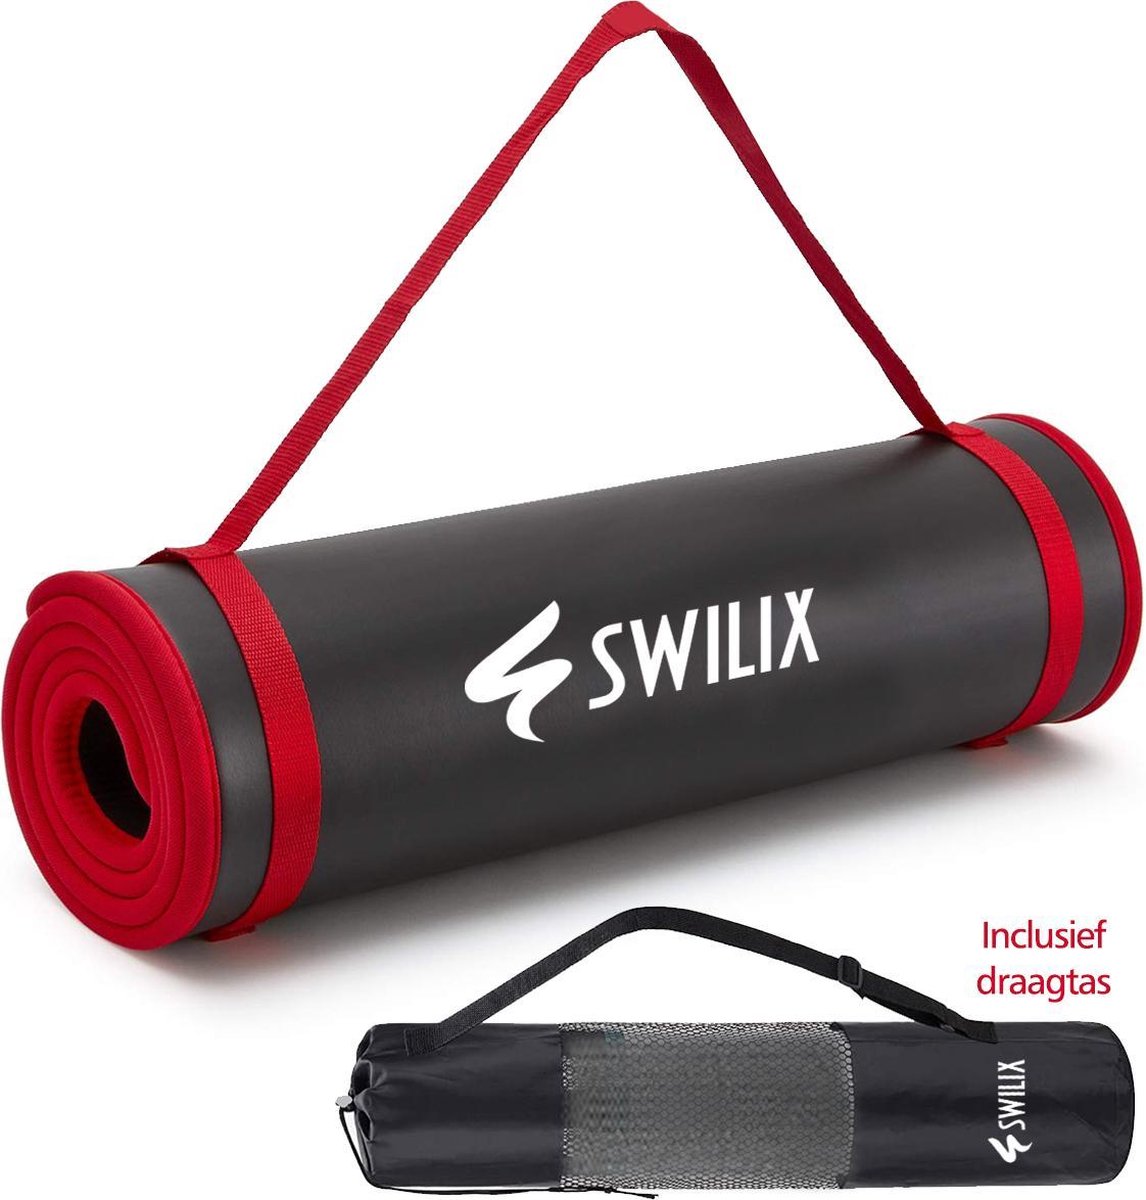 SWILIX ® Yoga Mat - Incl. Draagriem En Draagtas - Extra Groot - Zwart - 190 x 66 x 1.1 cm